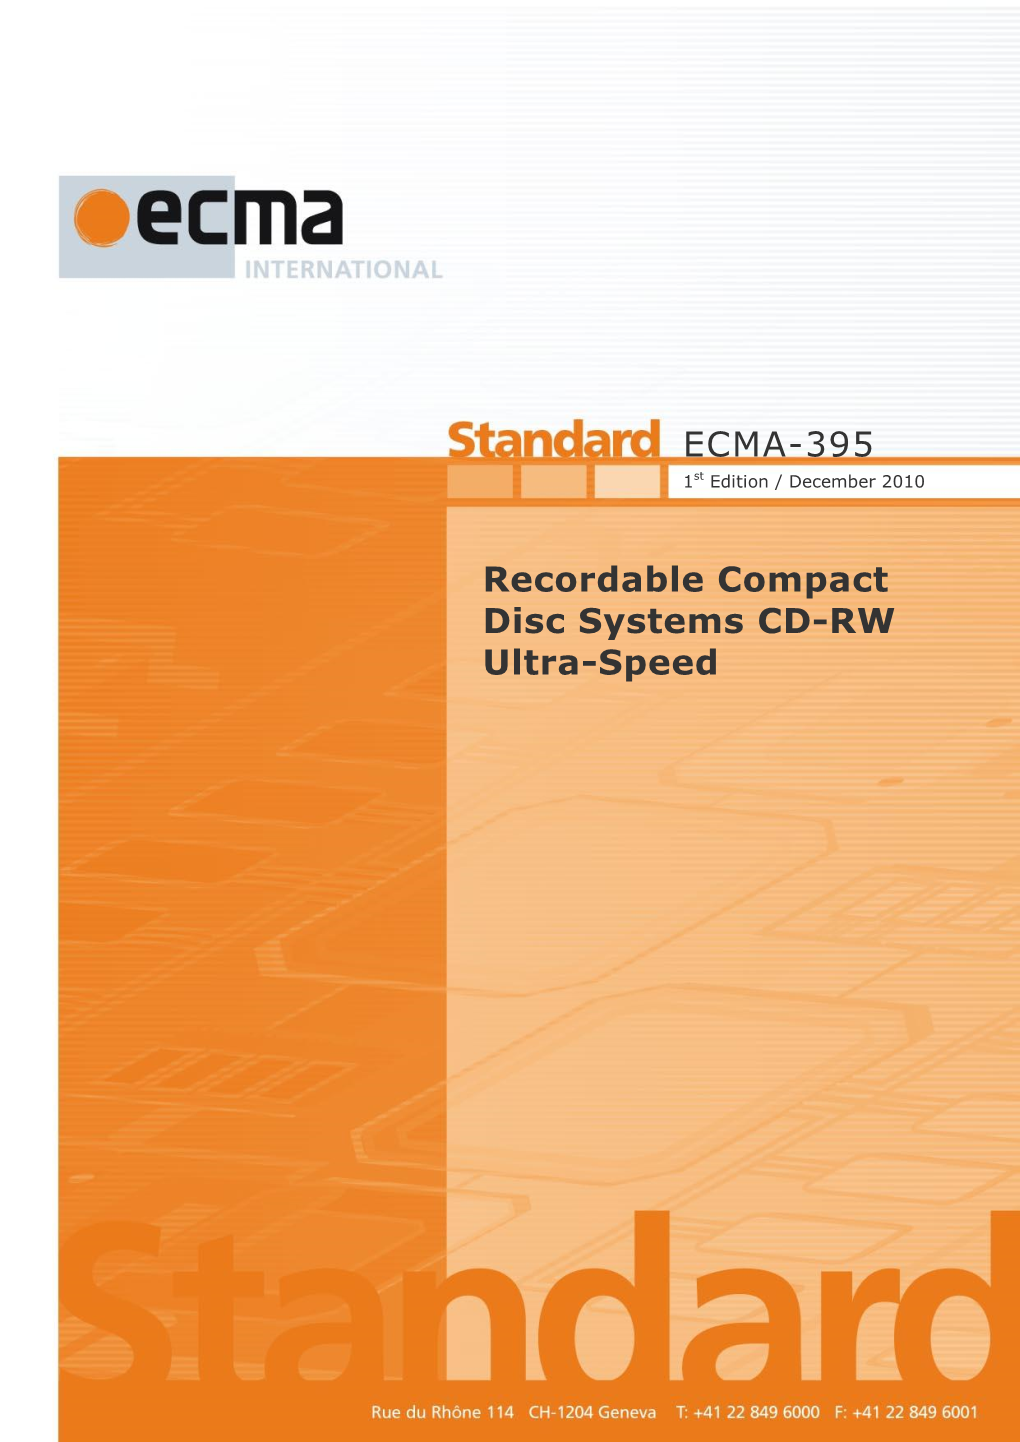 Final Draft Ecma Standard on CD-RW, August 2010